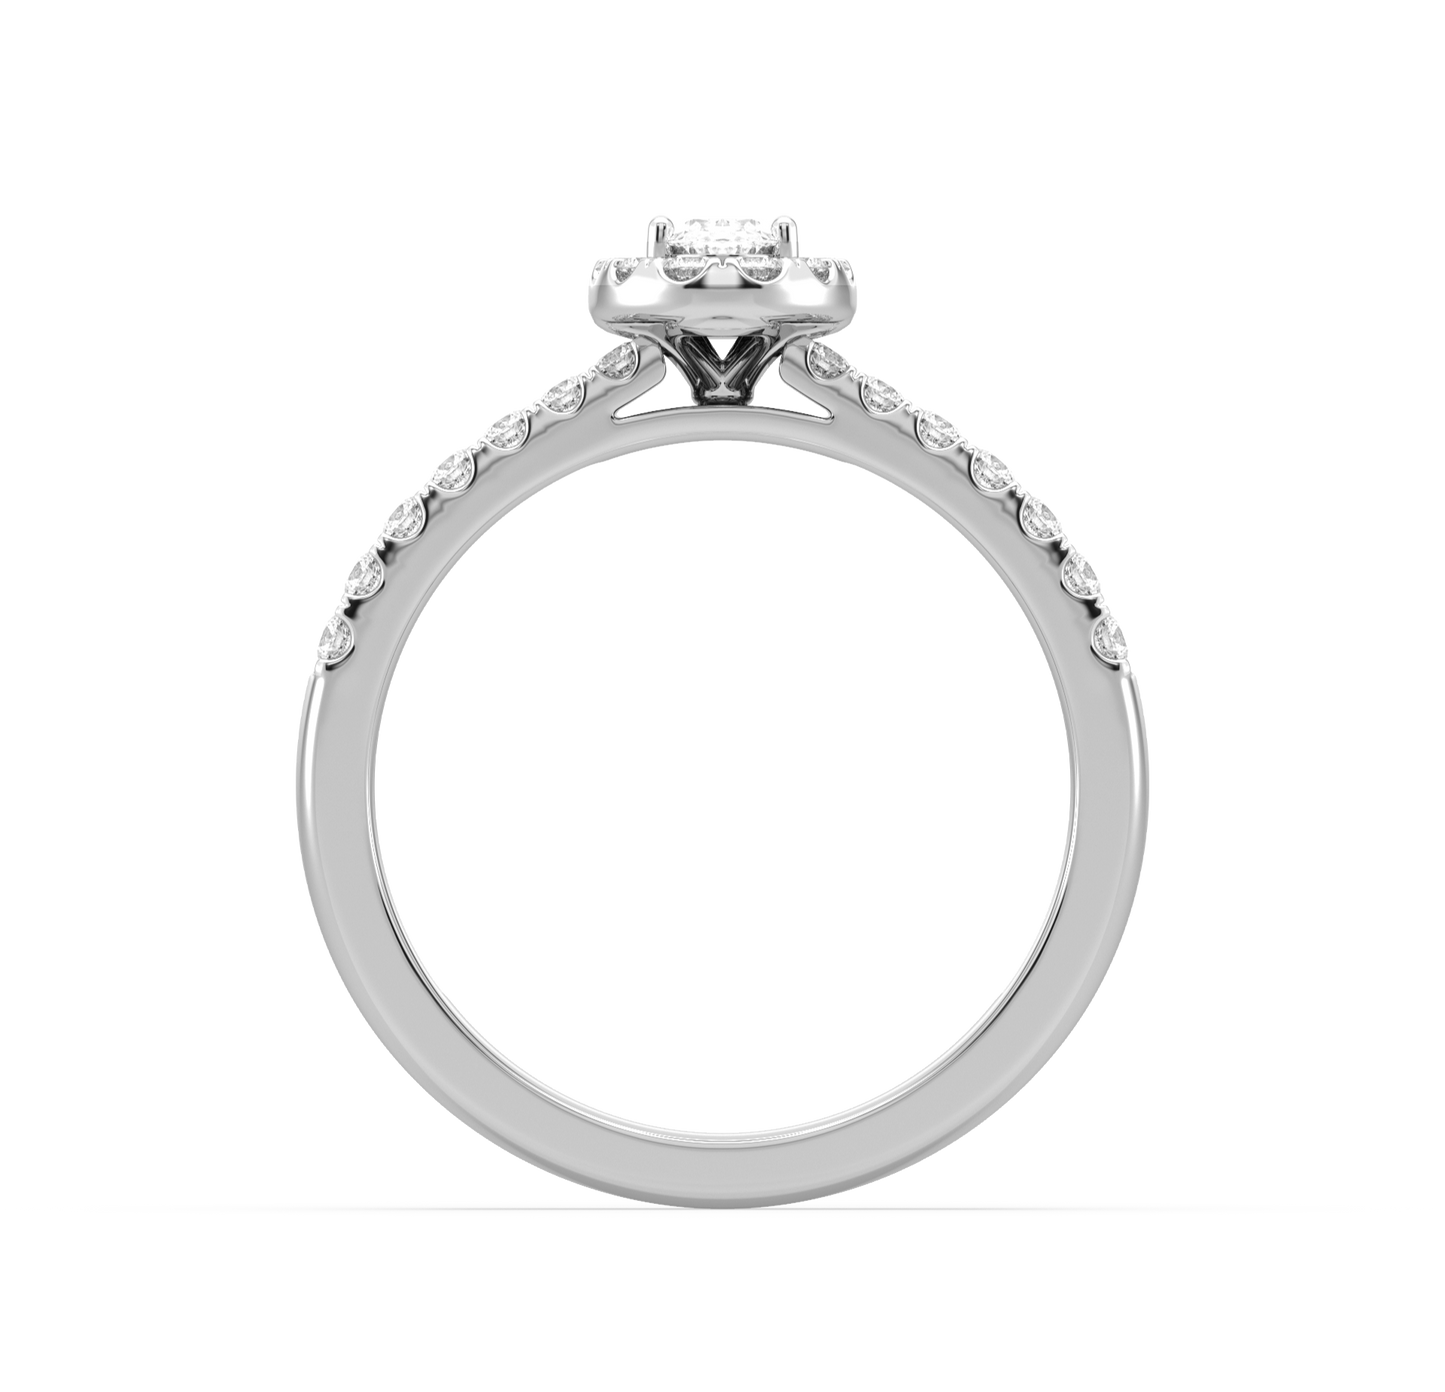 Customised ring RG21010-PH21031